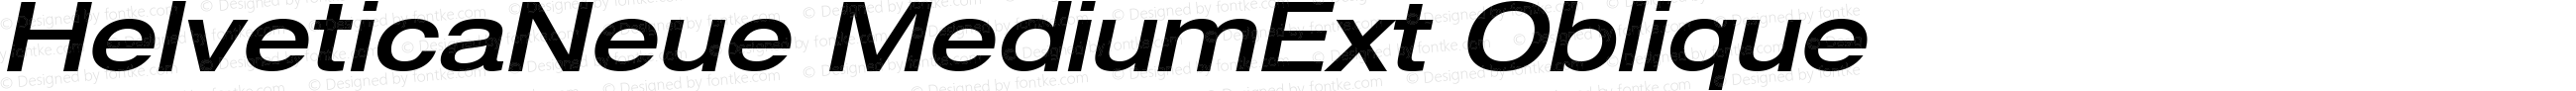 Helvetica 63 Medium Extended Oblique